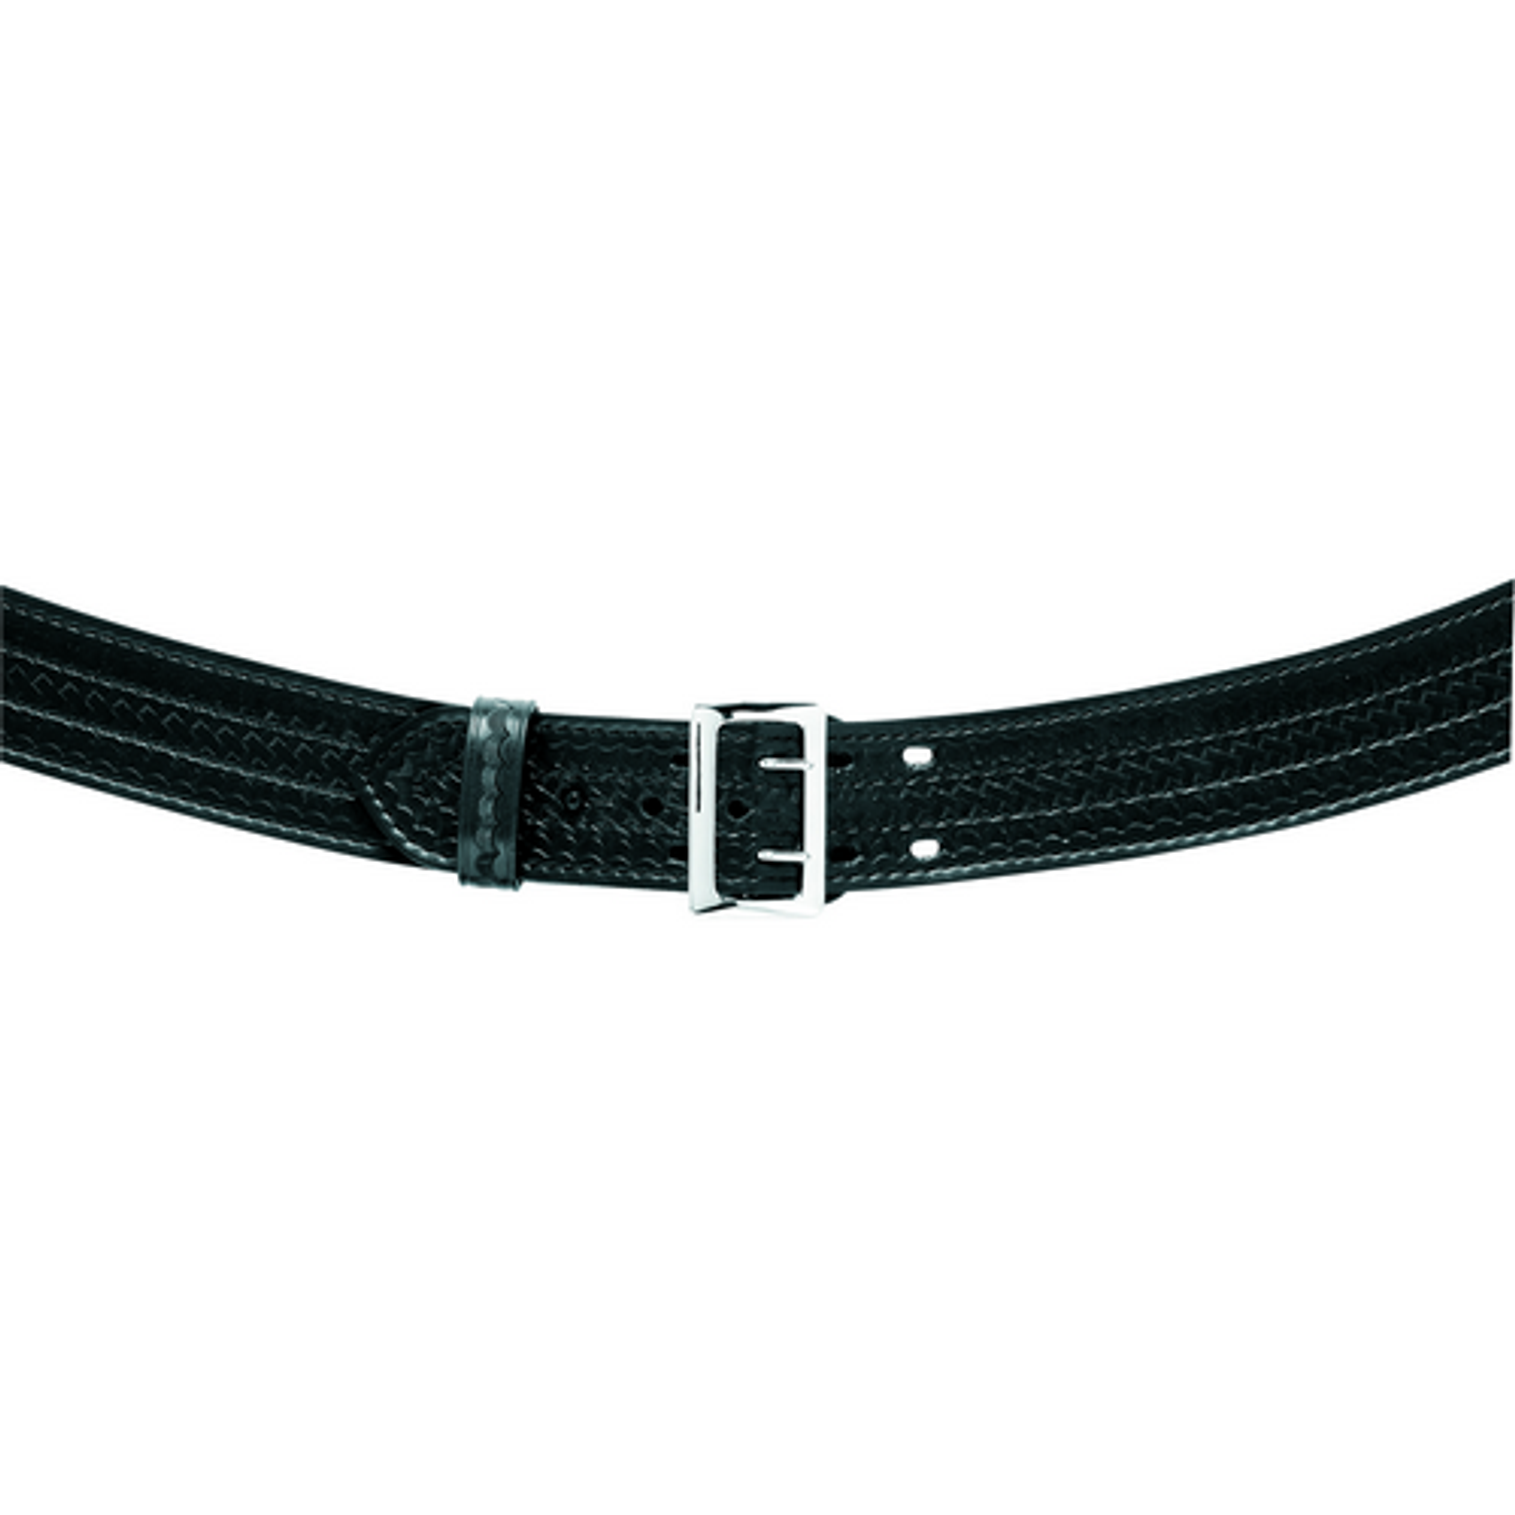 872 - Contoured Duty Belt, Suede Lined, 2.25 (58mm) - KR872-28-6B